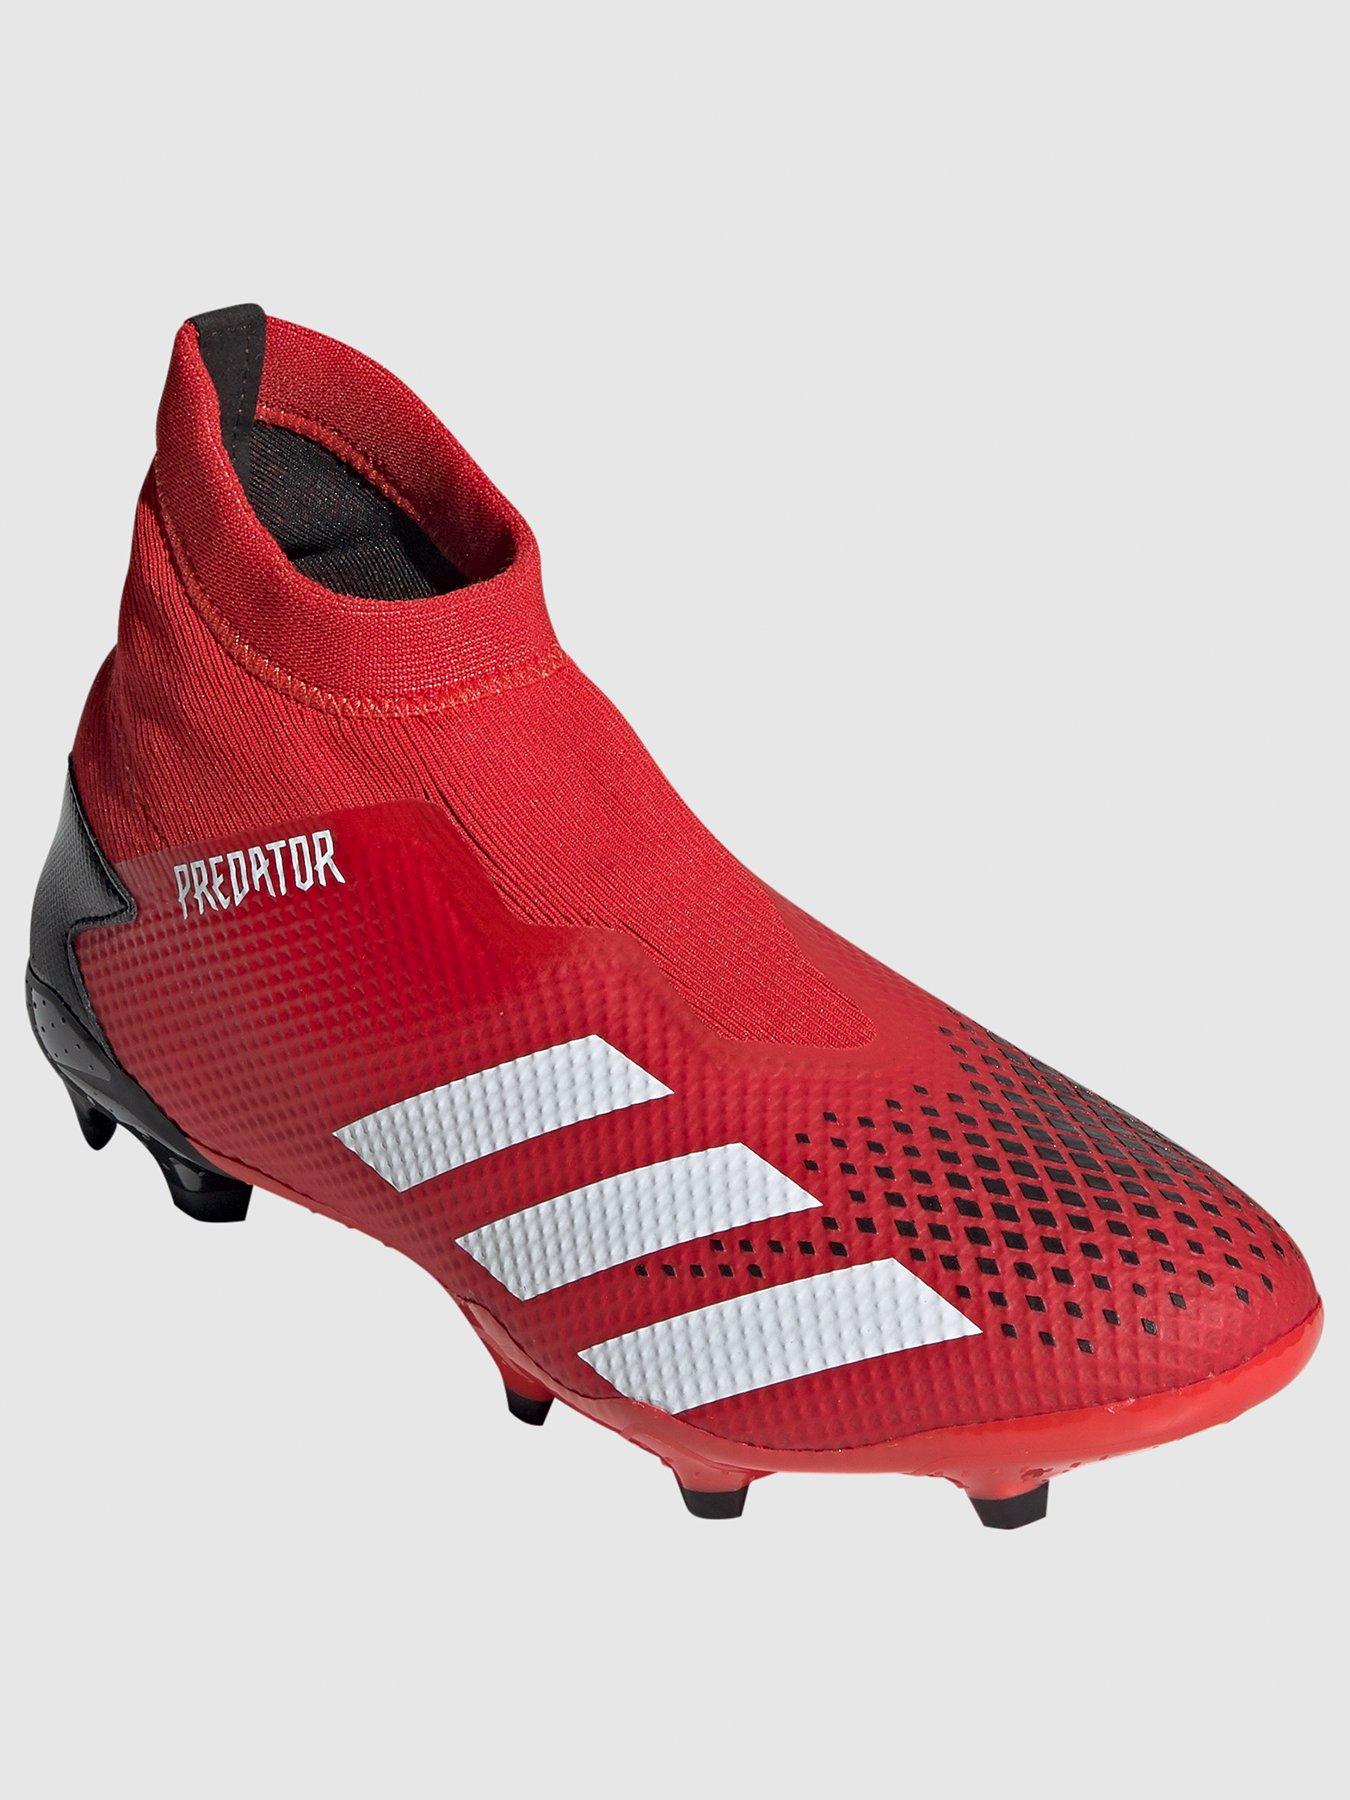 adidas football boots size 3.5